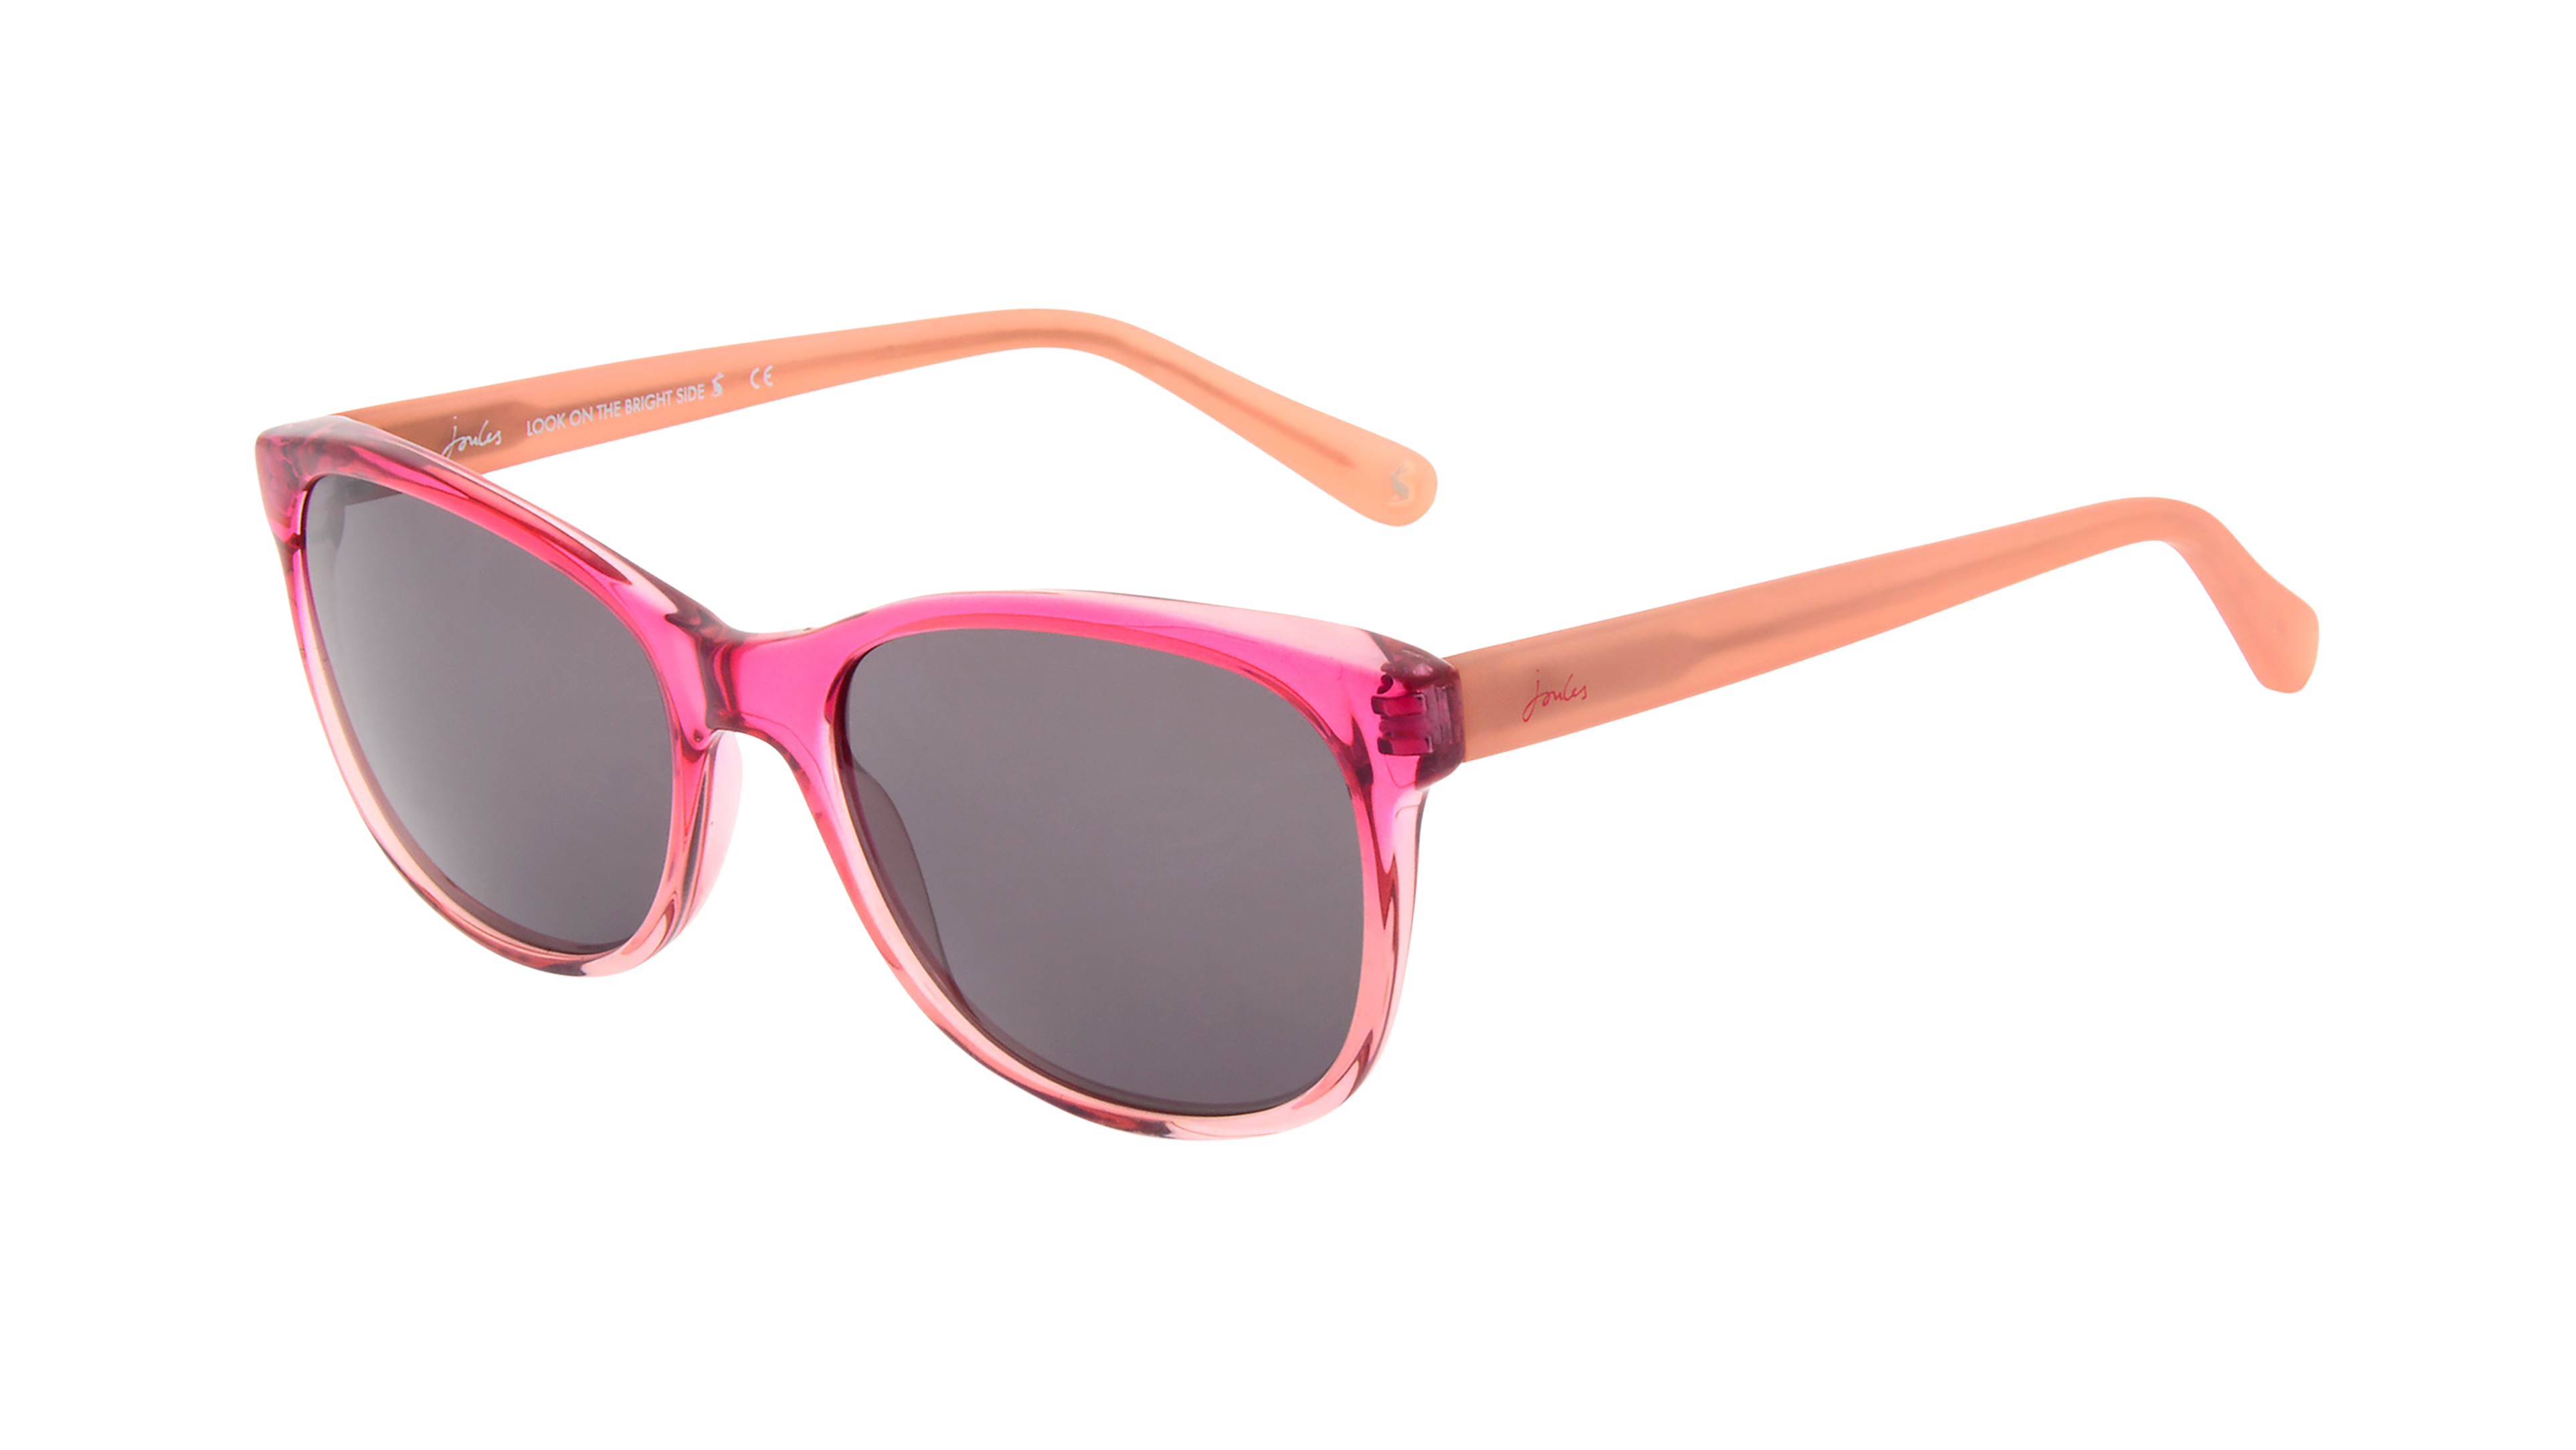 Angle_Left01 Joules JS 7016 Sunglasses Grey / Transparent, Pink